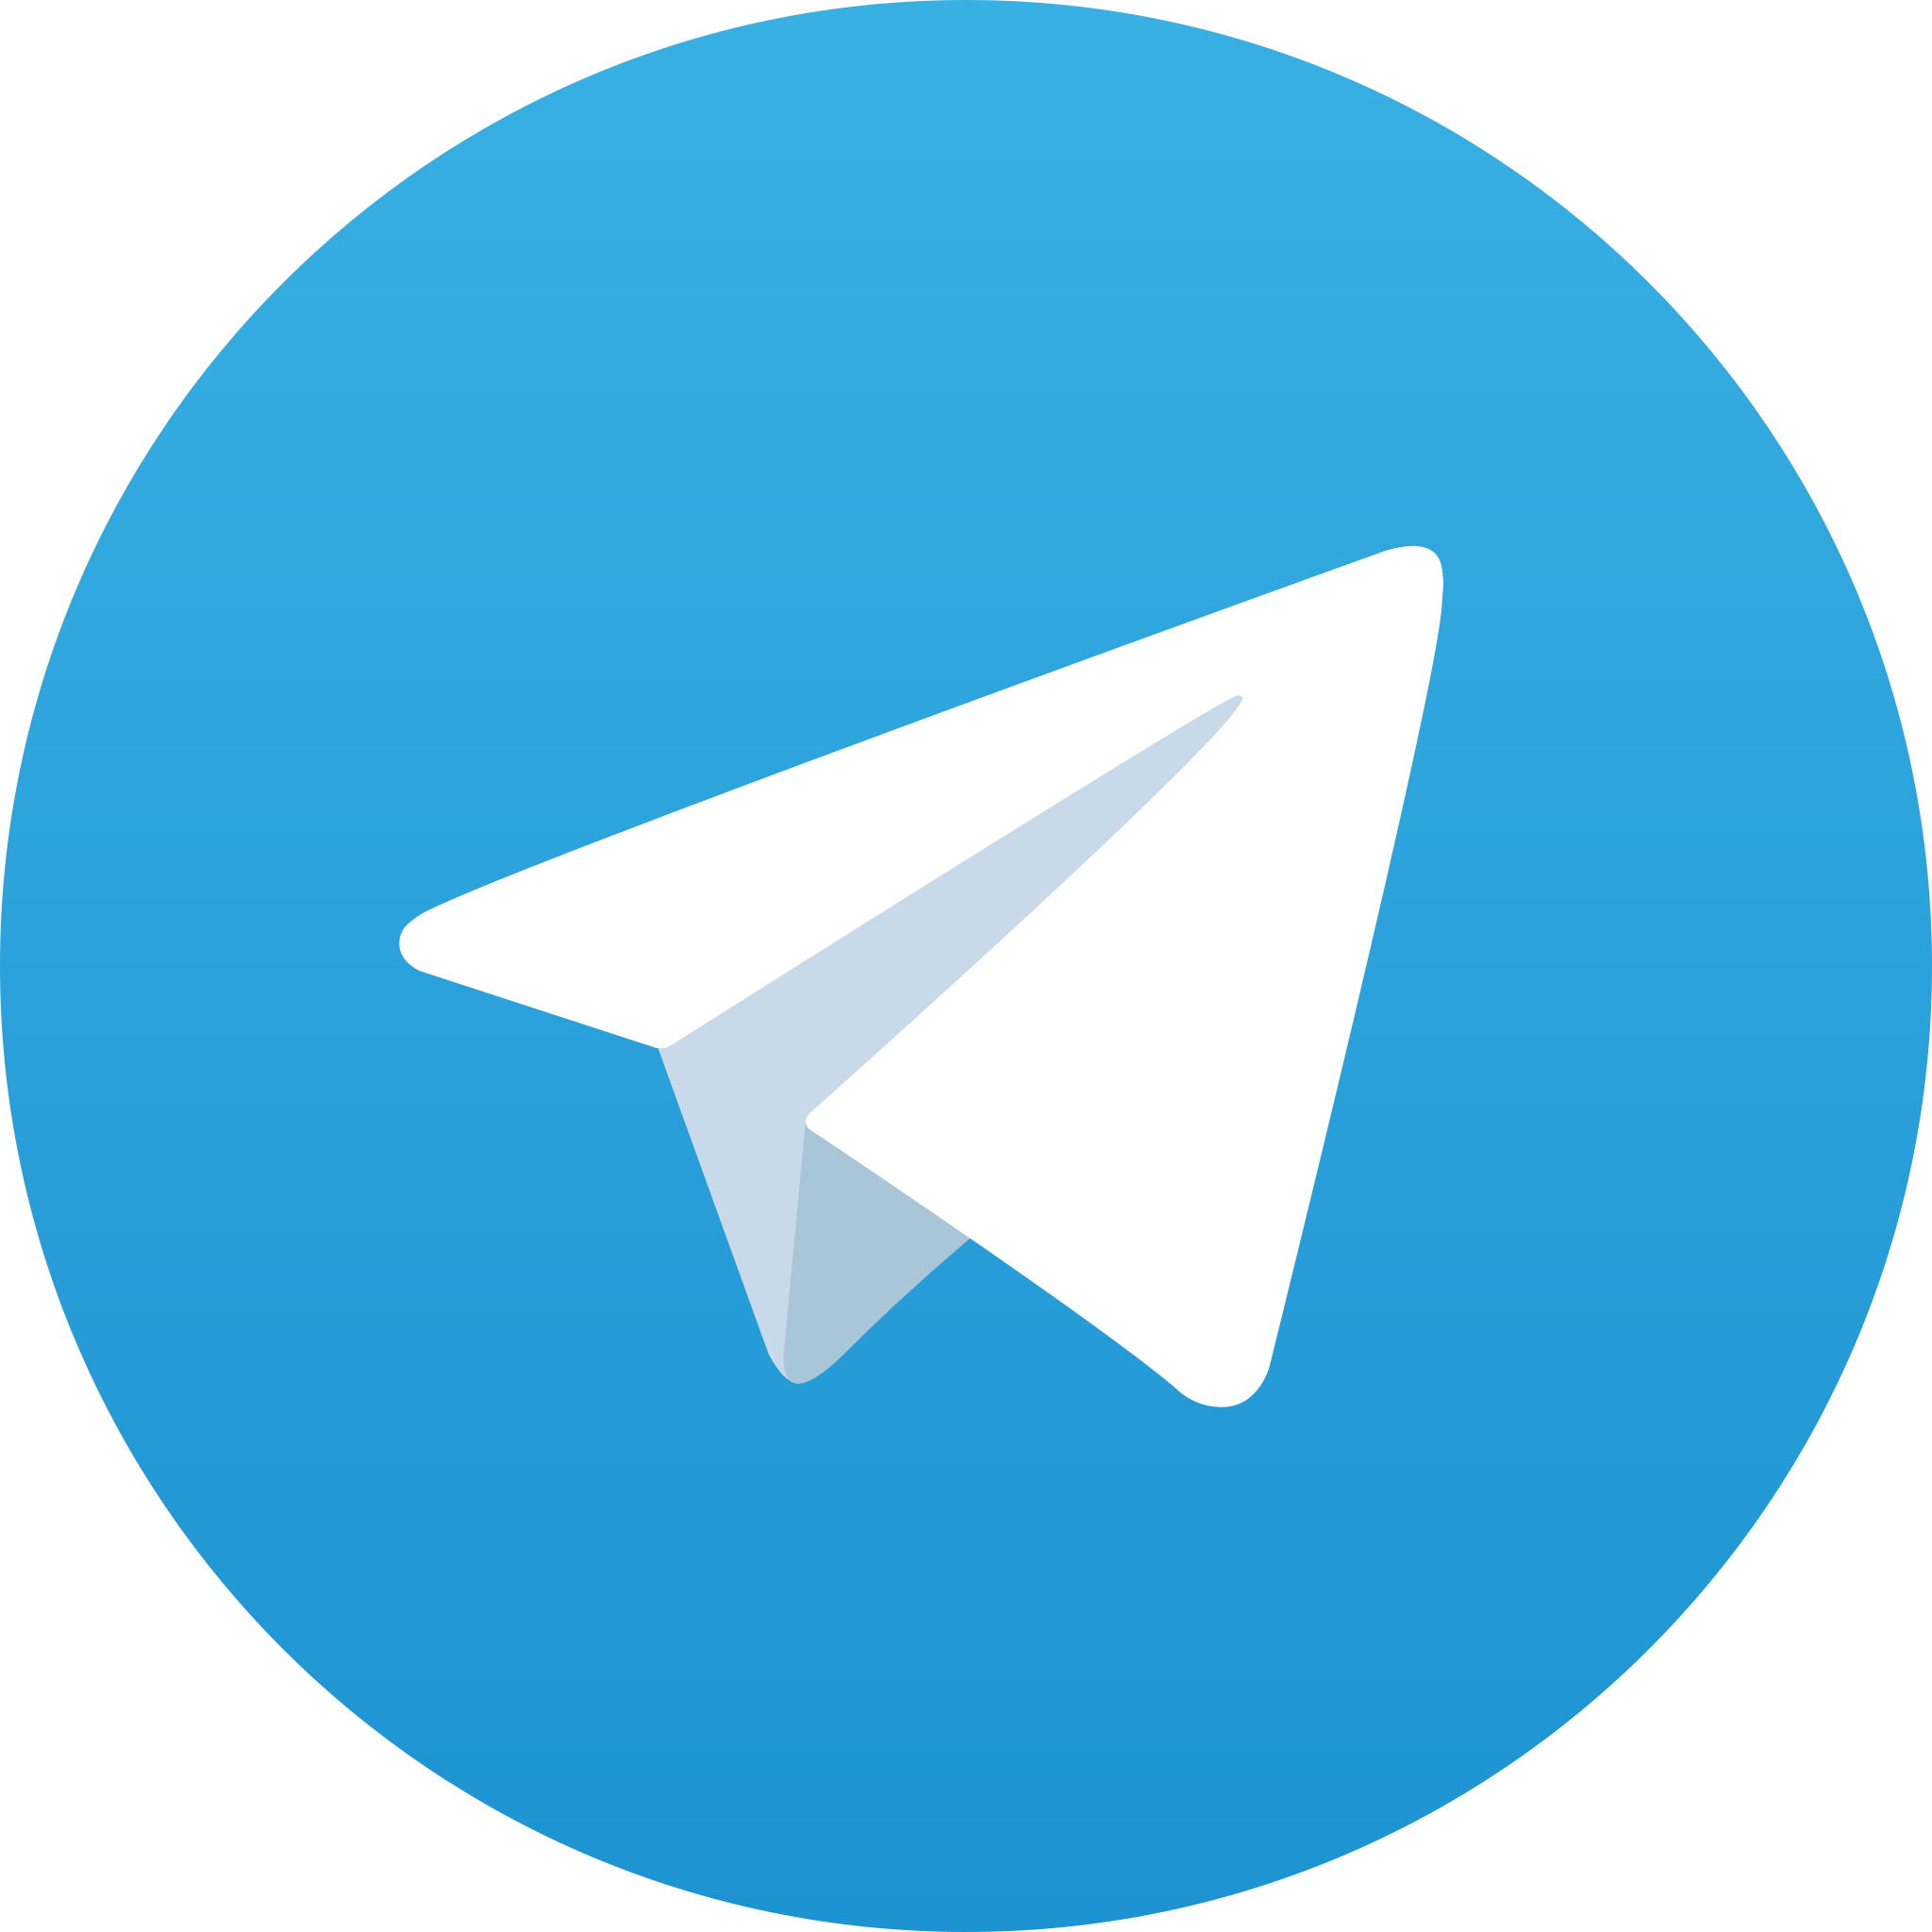 File:Telegram logo.svg - Wikipedia